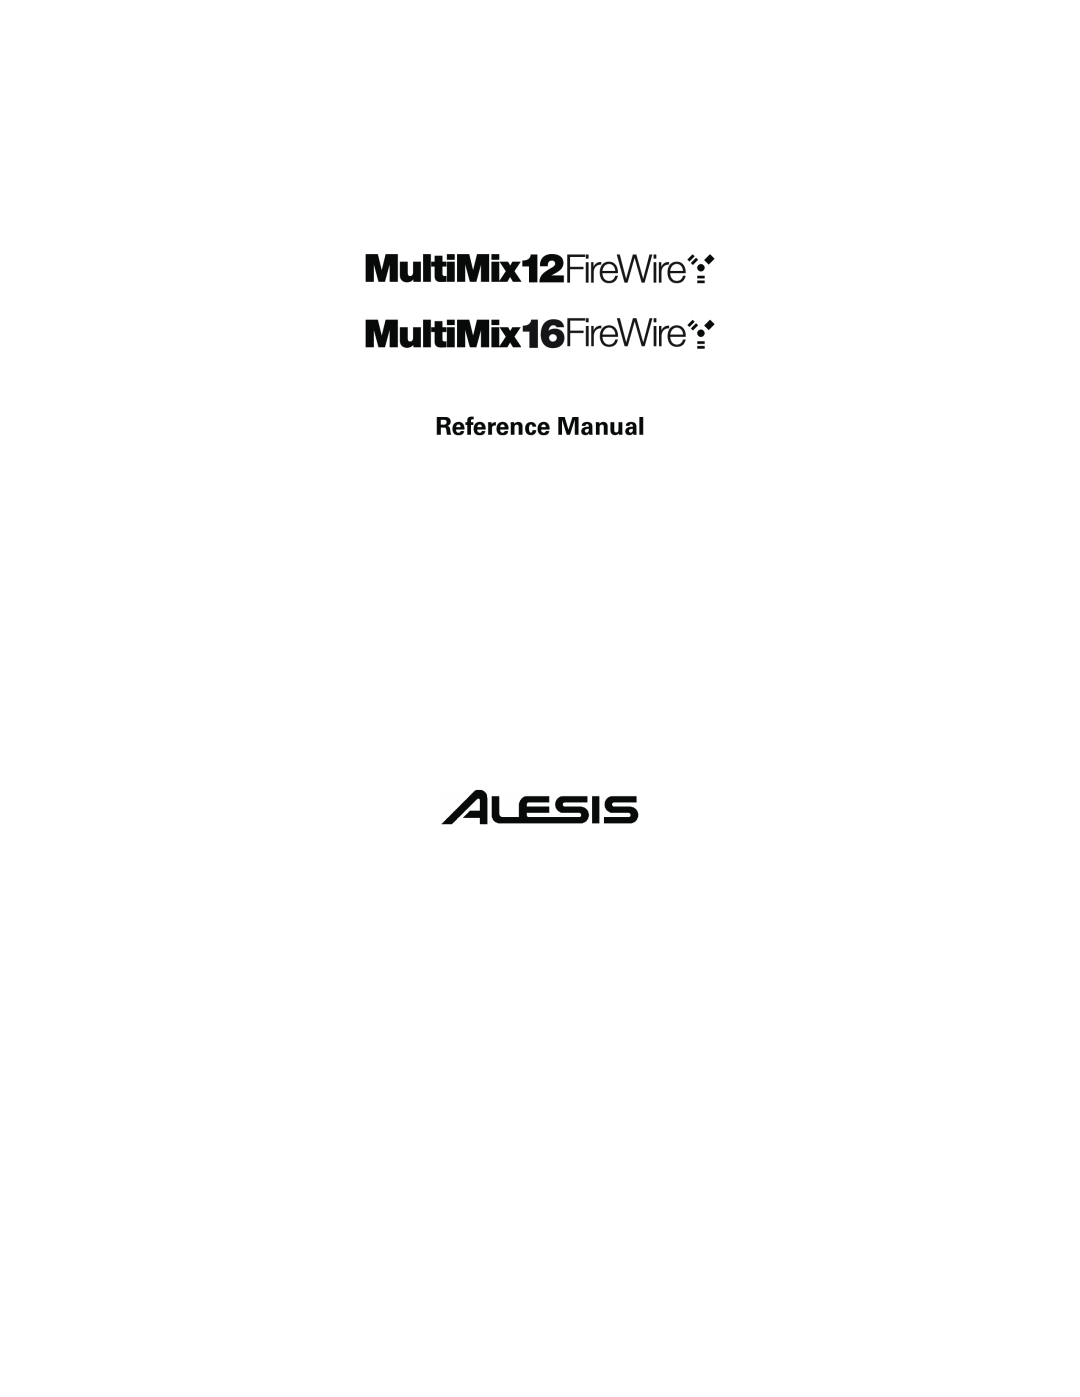 Alesis 12 FireWire, 16 FireWire, 12, 16 manual Reference Manual 